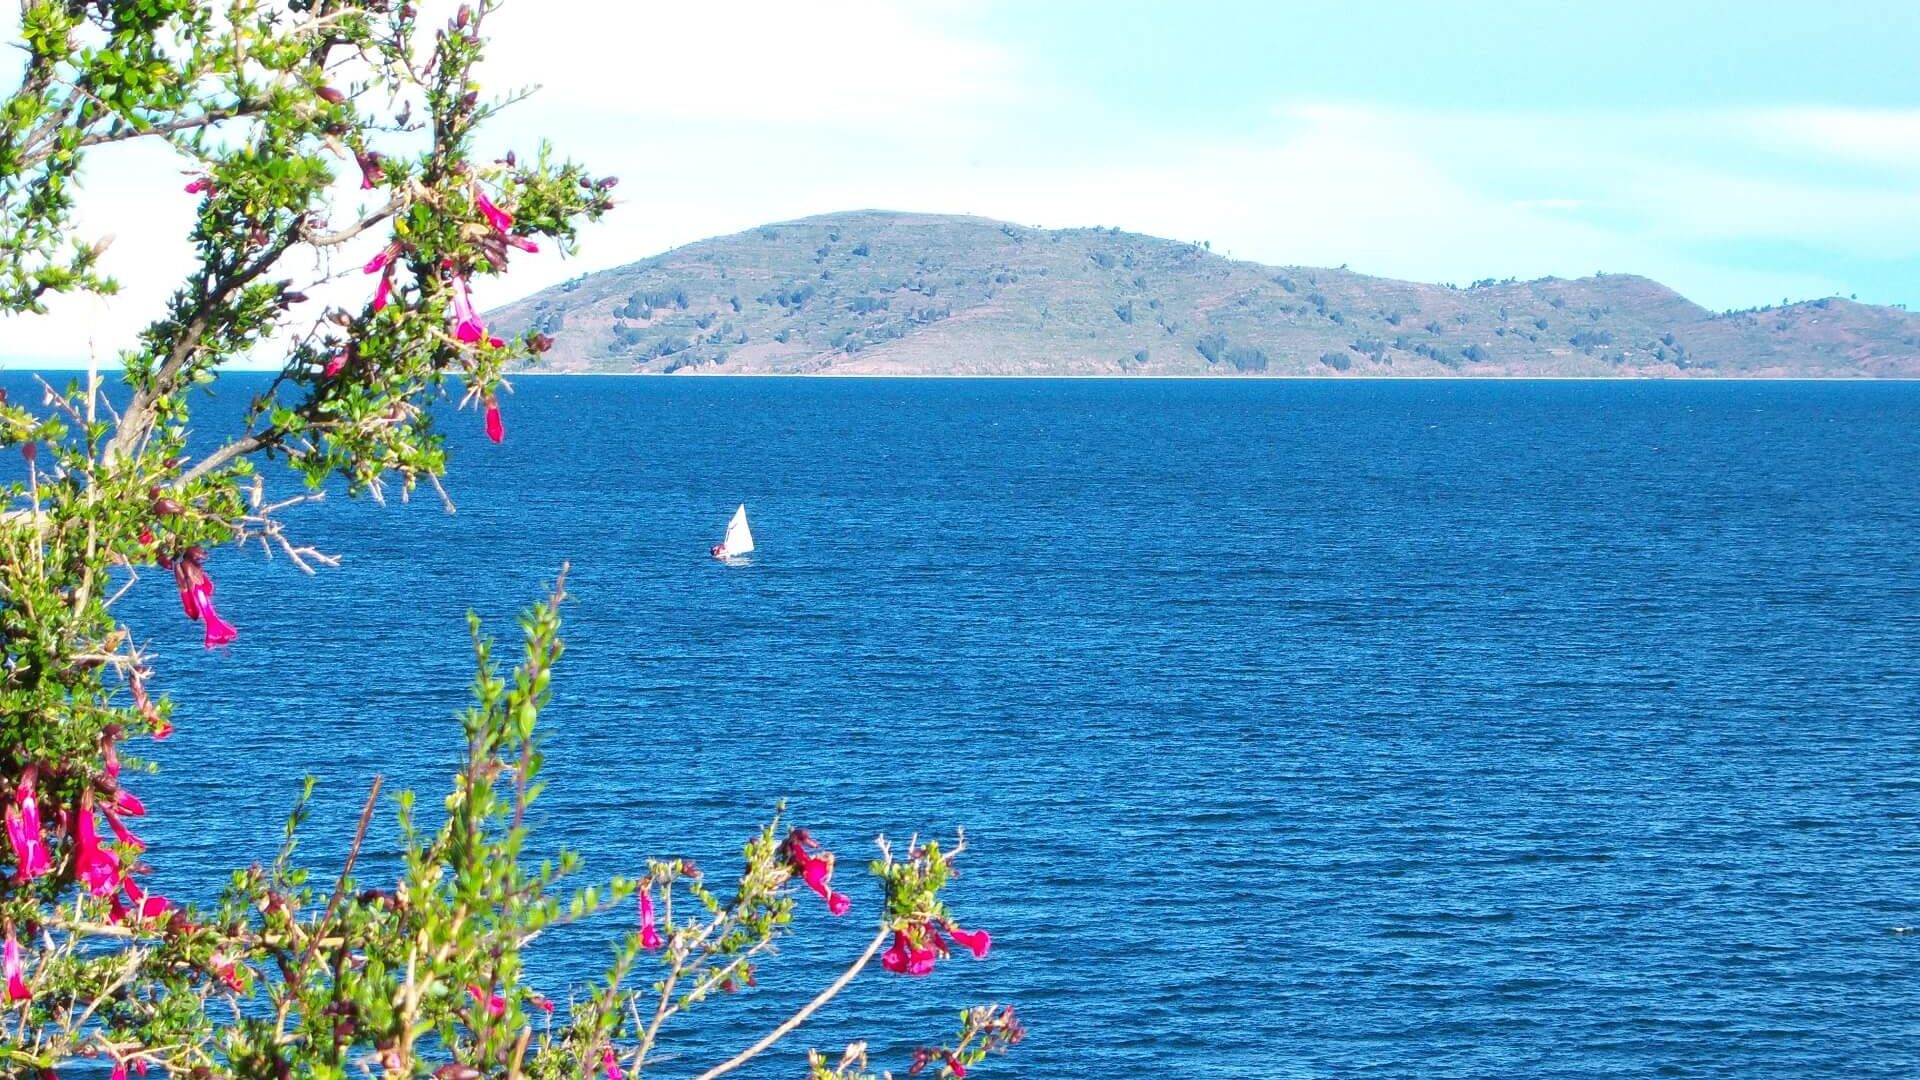 A sailboat at Lake Titicaca. Visit Lake TIticaca in a unique way | RESPONSible Travel Peru